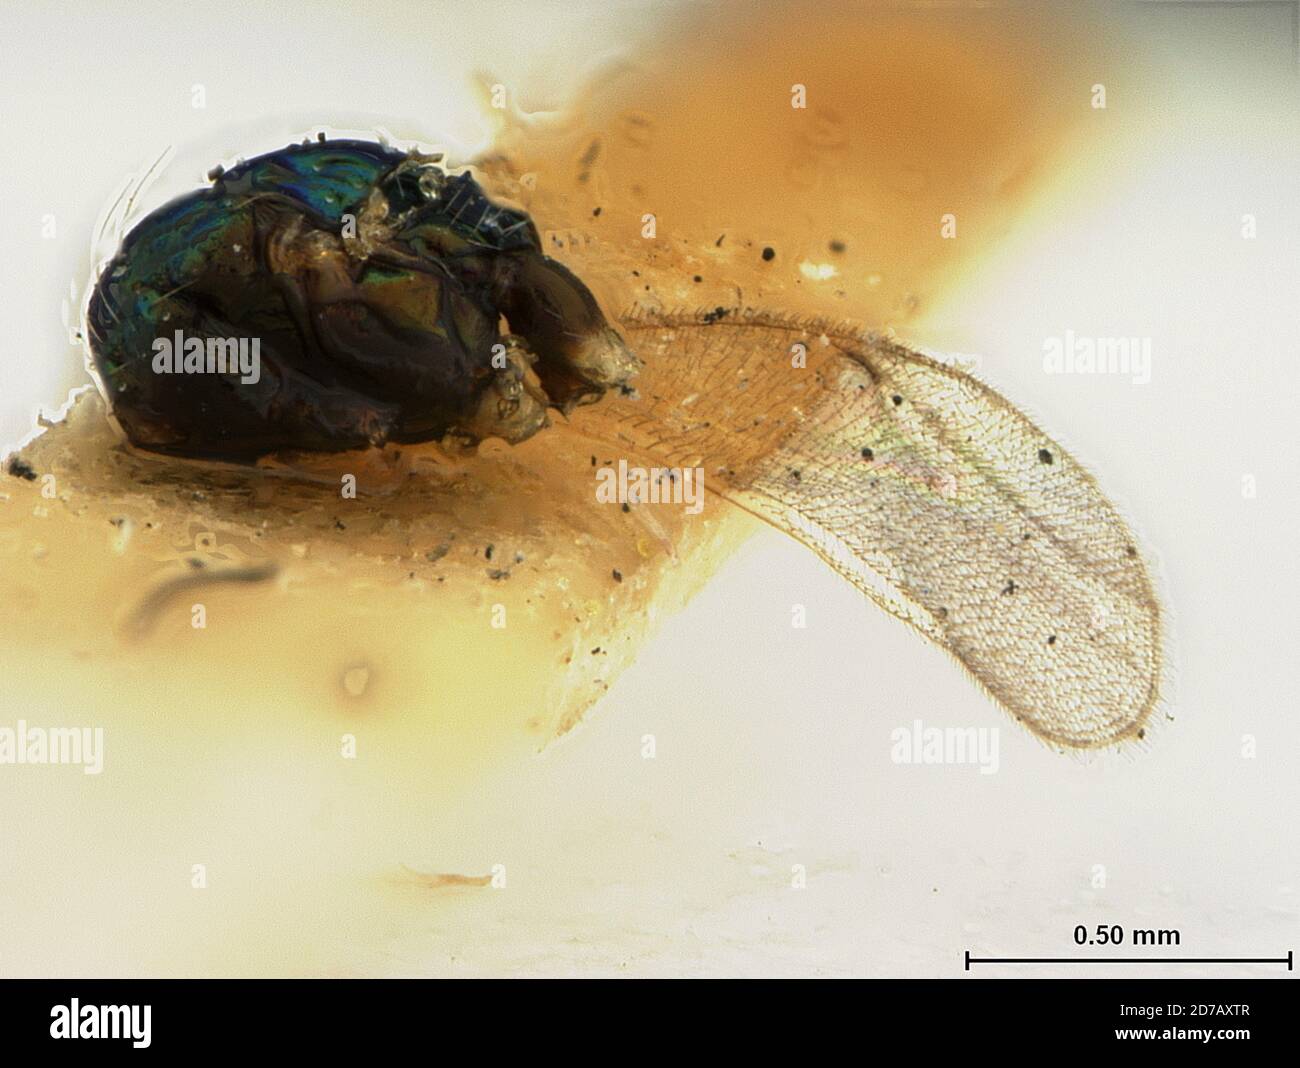 Washington, District of Columbia, United States, Euophthalmomyia pallidipes Ashmead, 1904, Animalia, Arthropoda, Insecta, Hymenoptera, Eulophidae Stock Photo